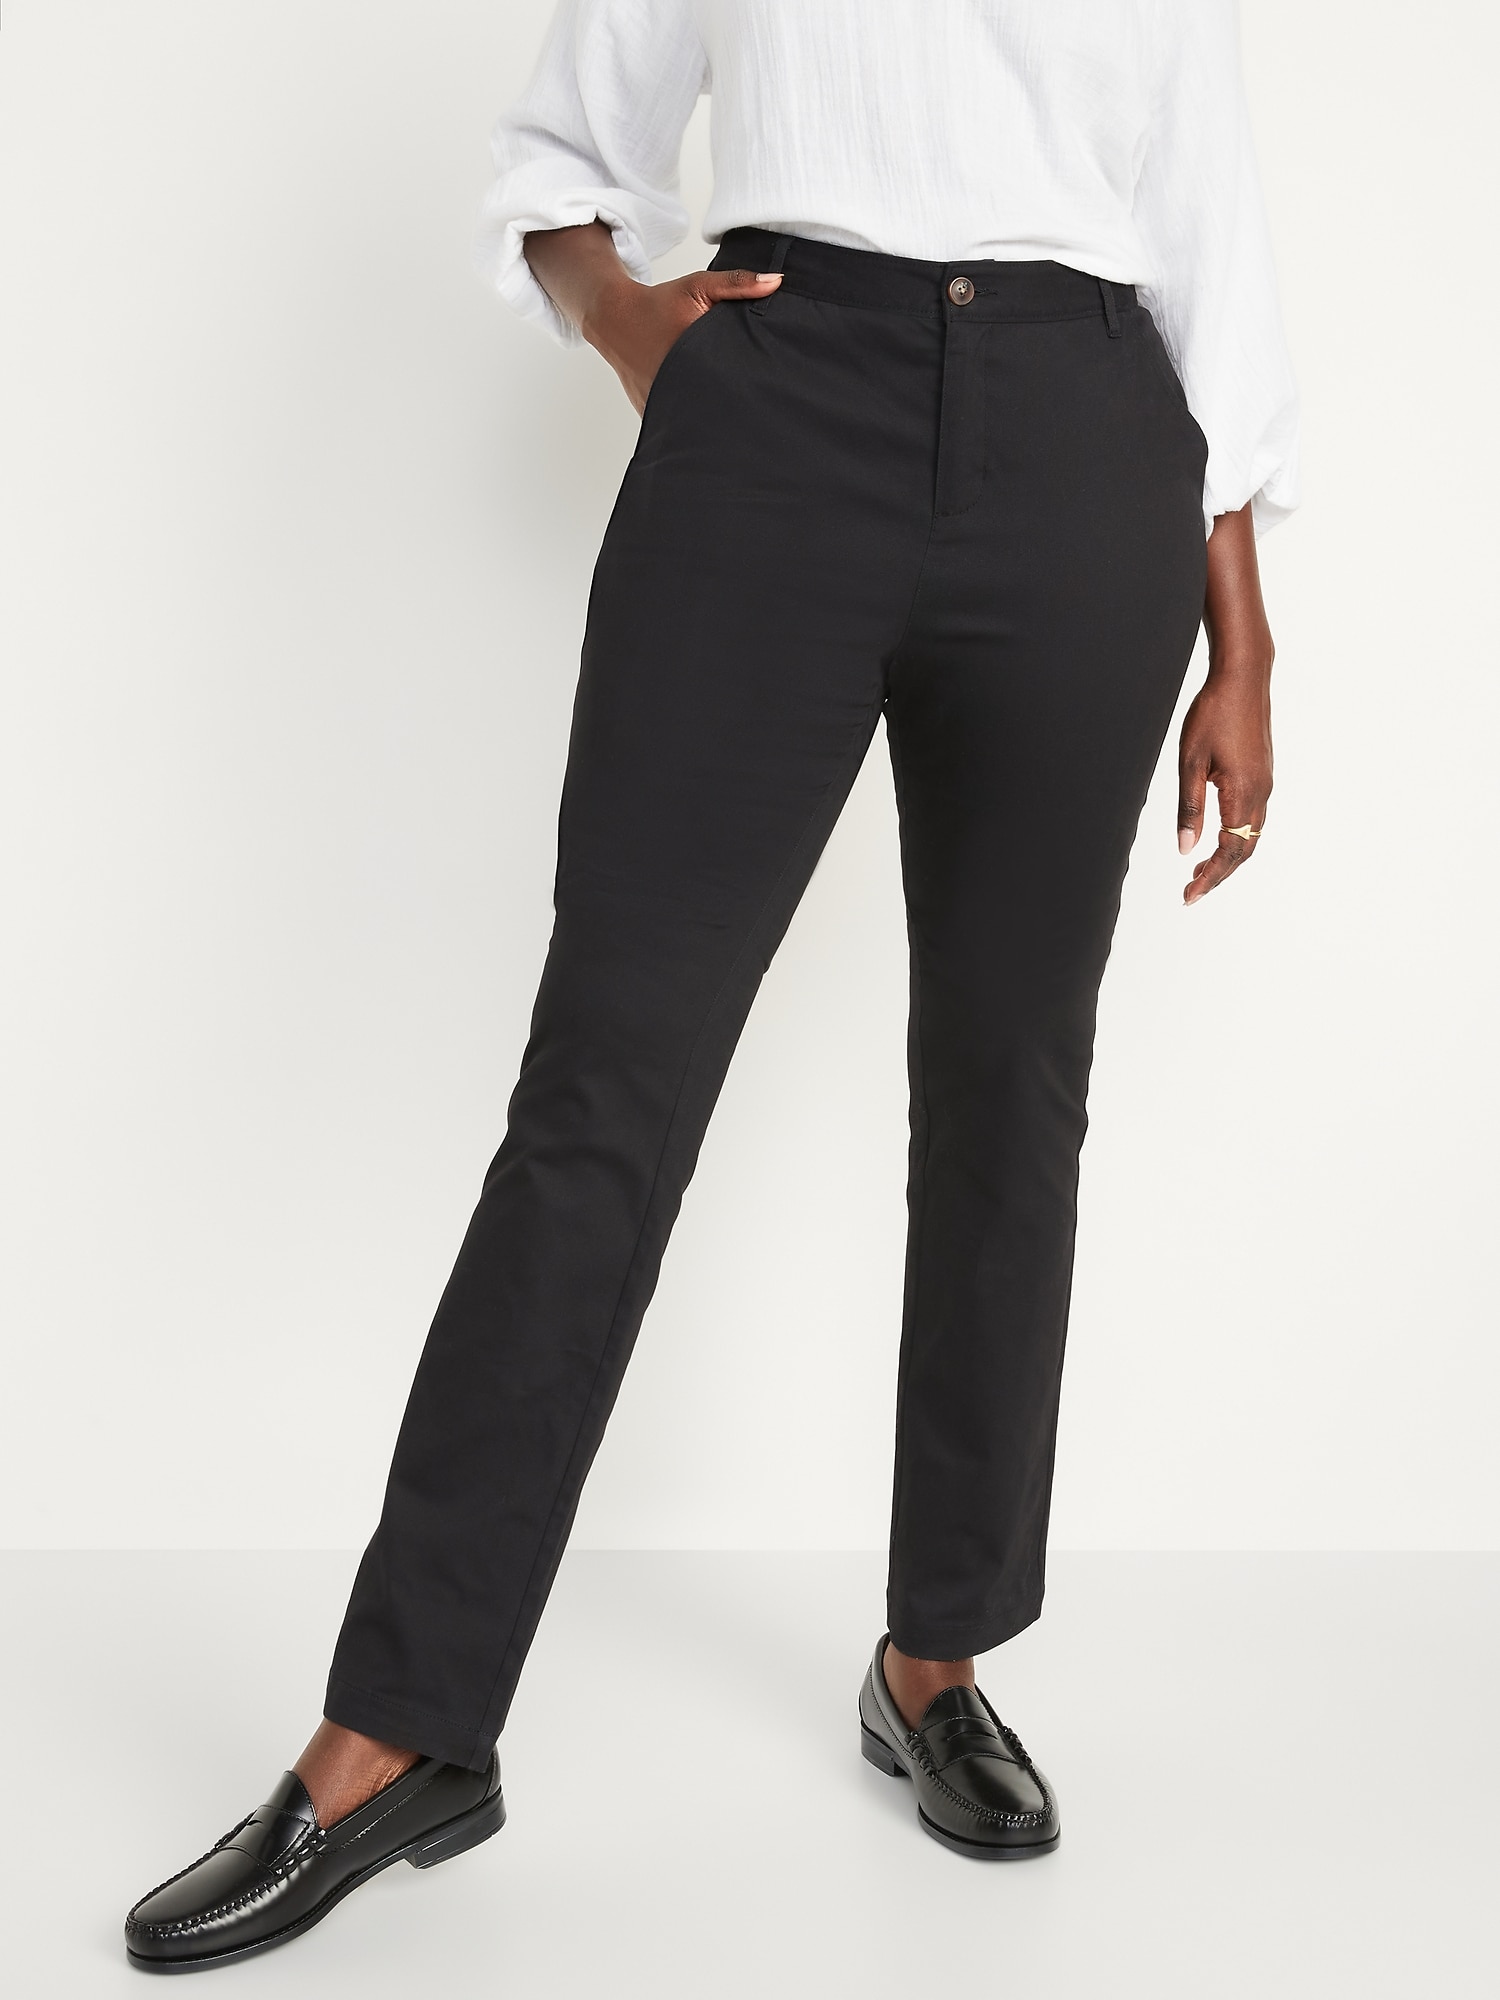 Cigarette trousers - Black - Ladies | H&M GB-saigonsouth.com.vn